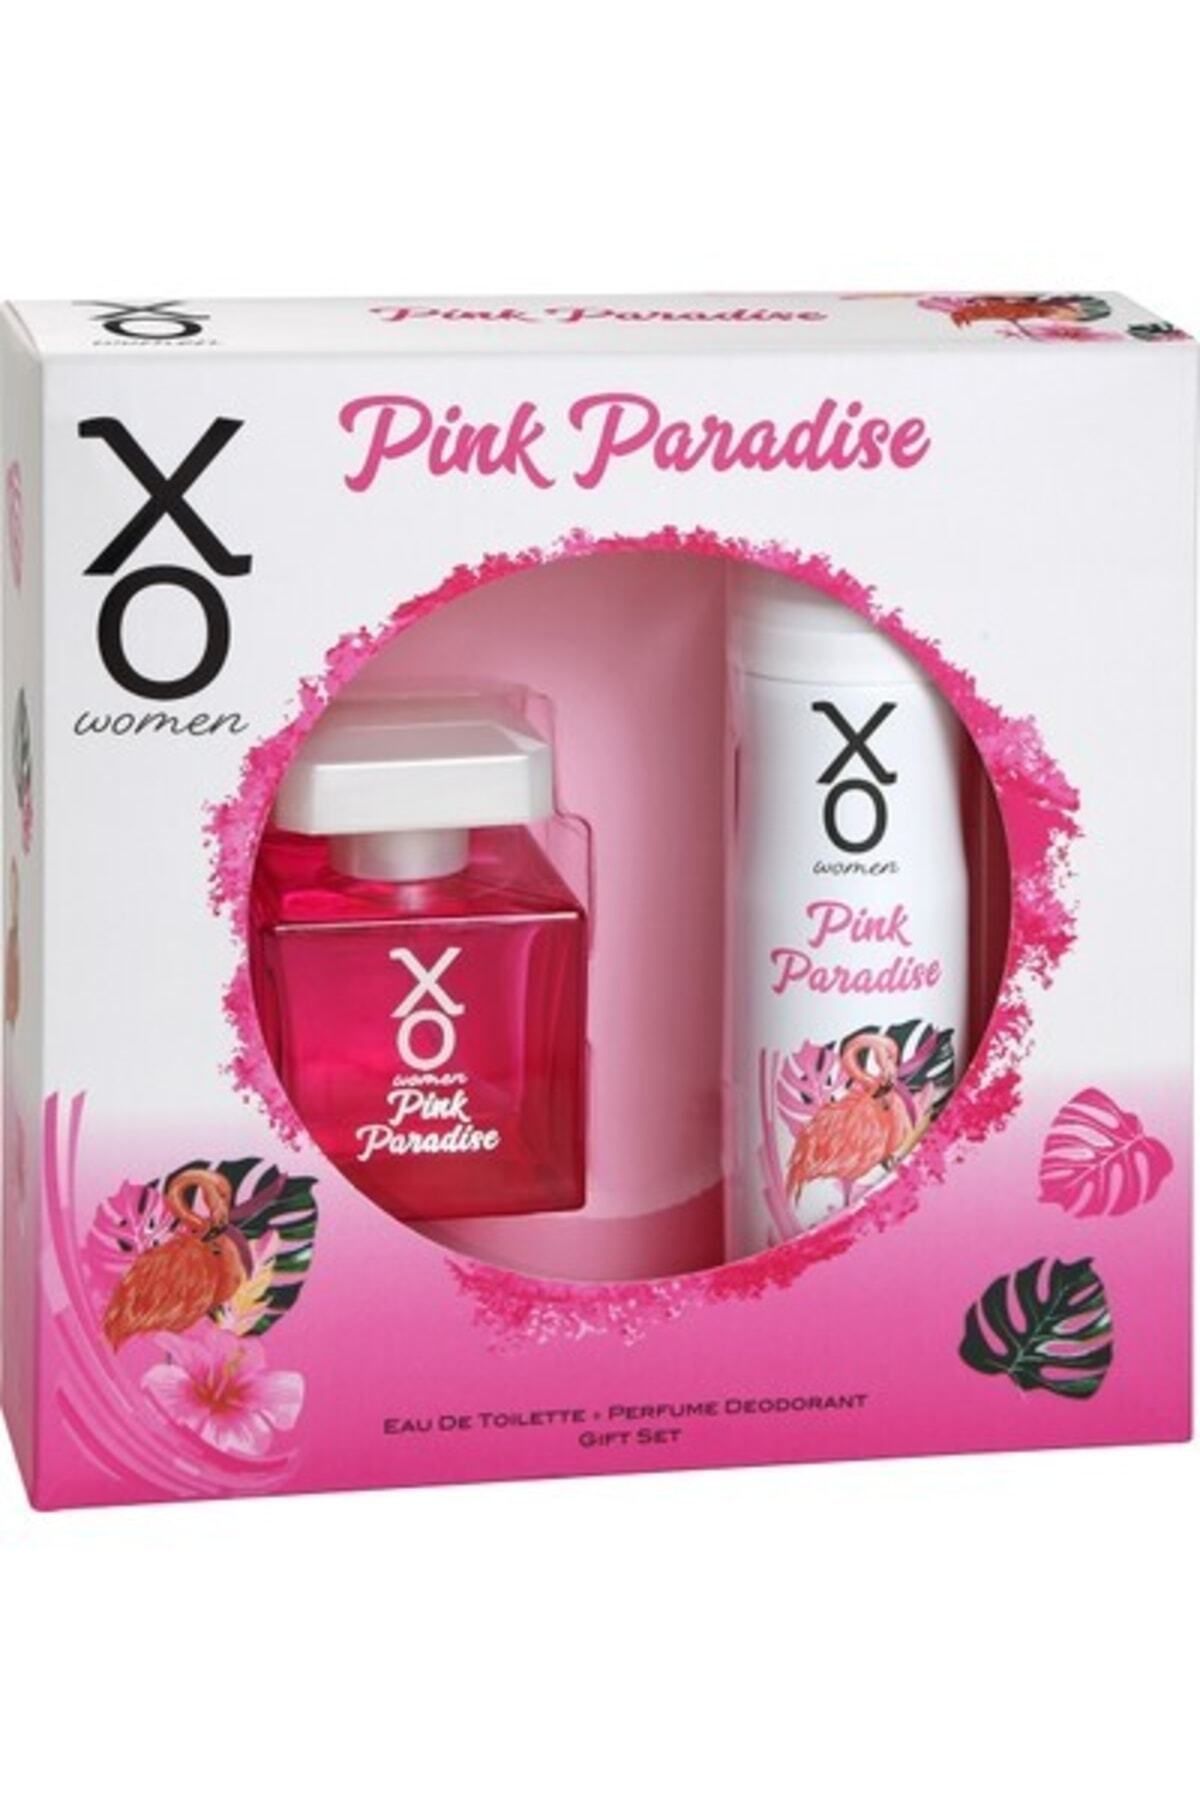 Xo Pink Paradise Kadın Parfüm Seti 100 Ml Edt + 125 Ml Deodorant Ikili Set